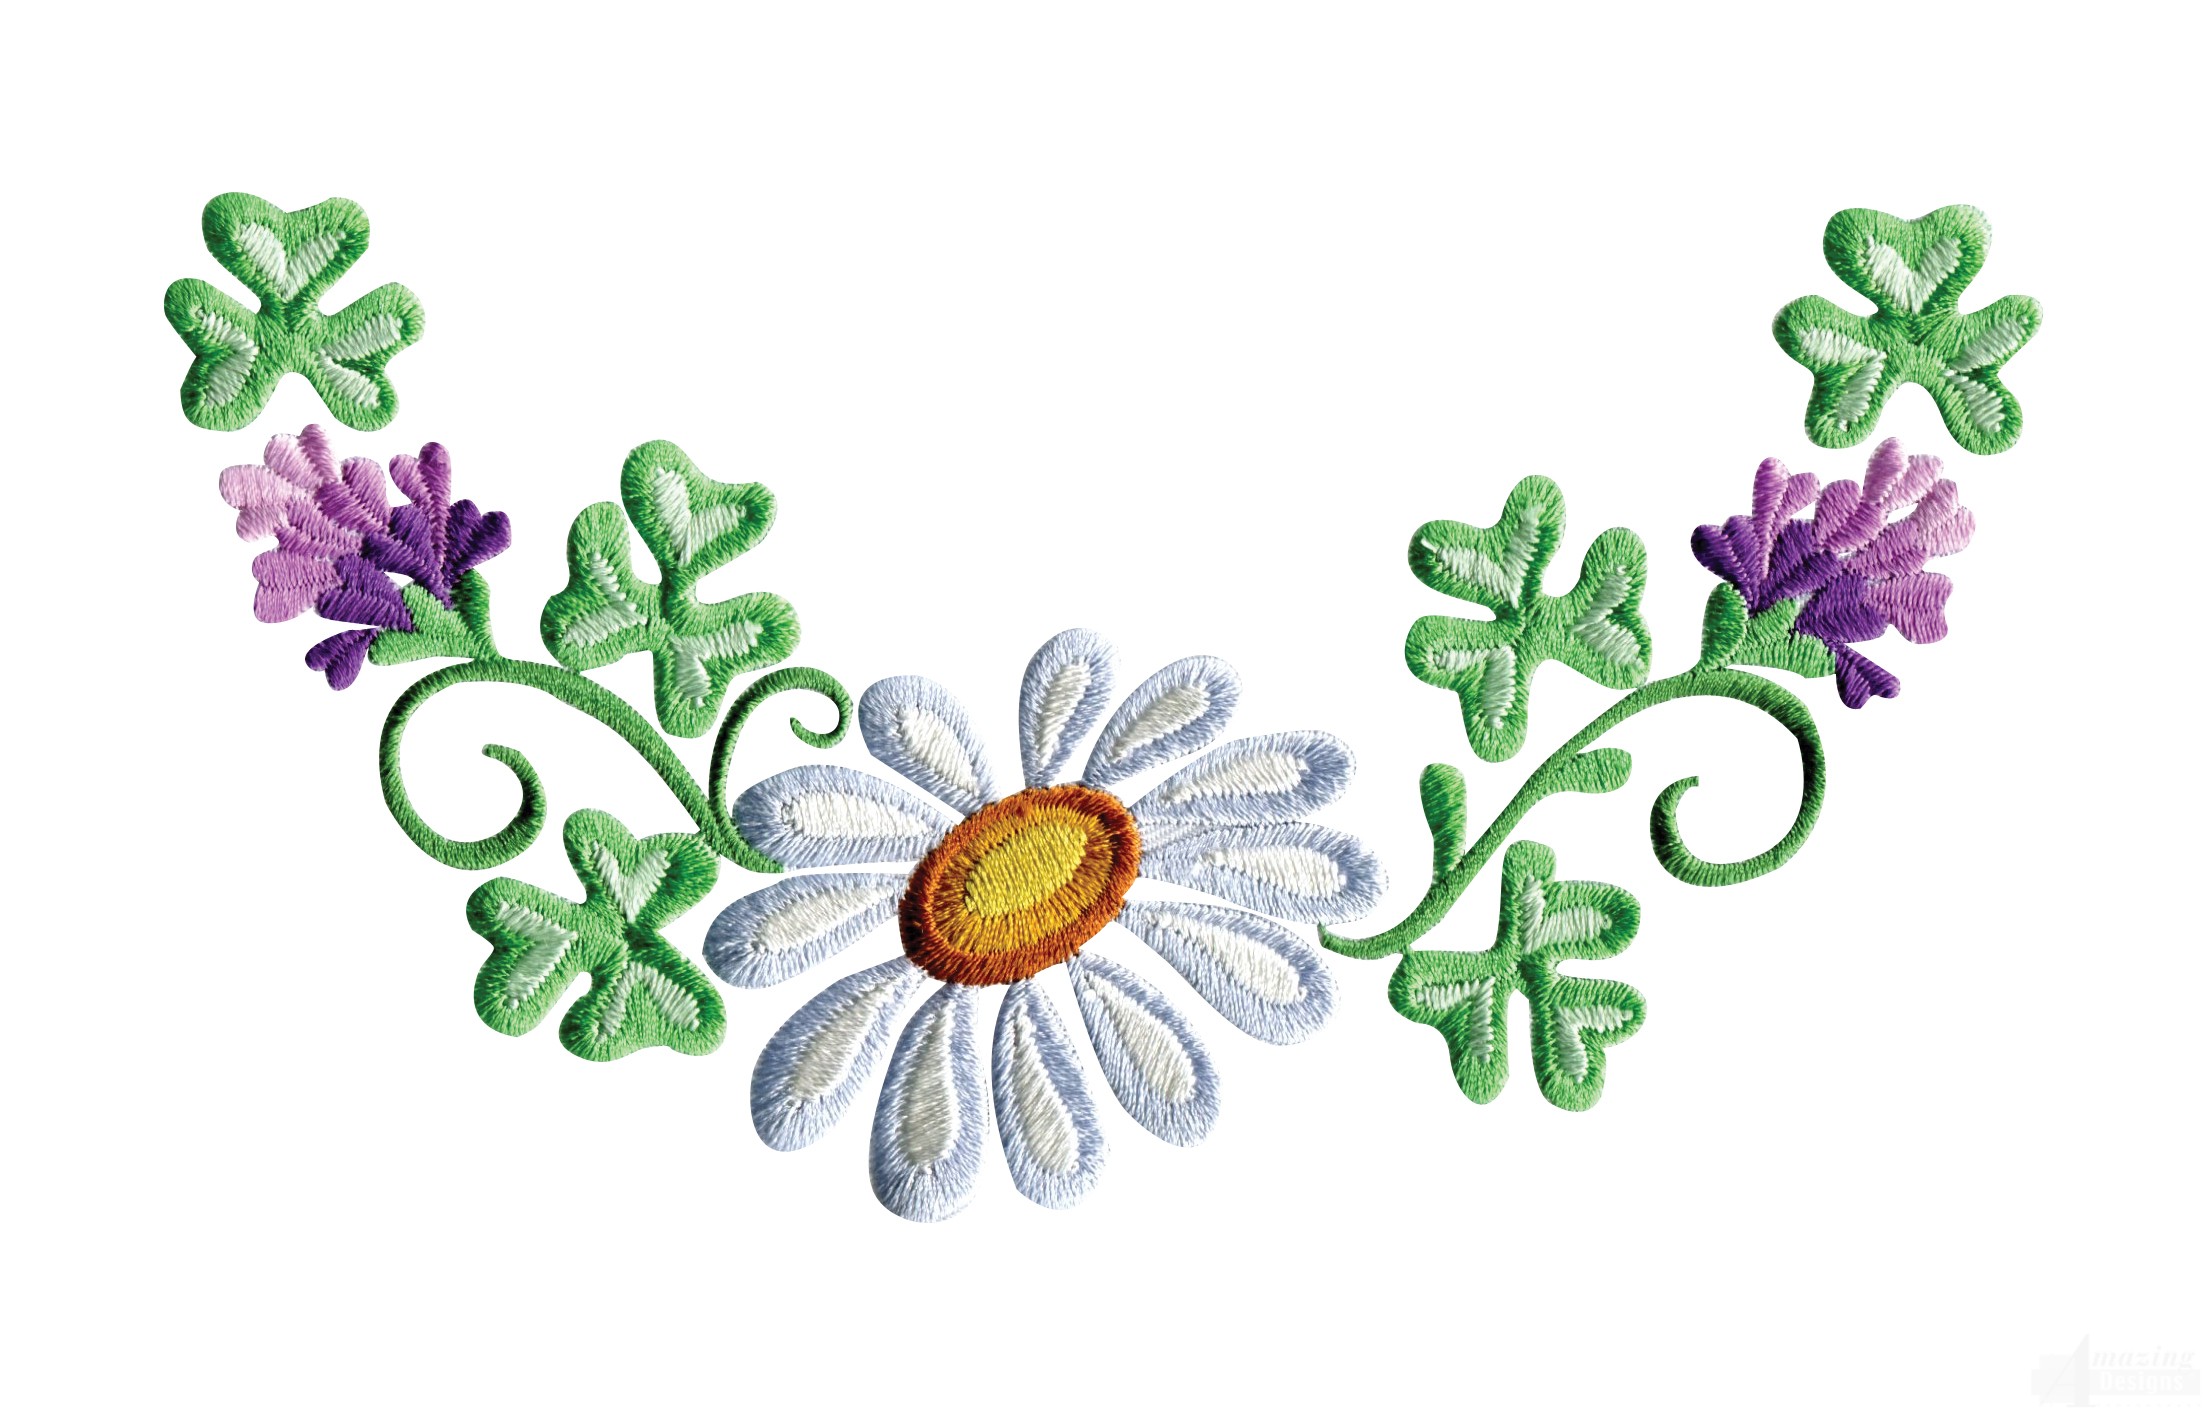 Simple Flower Design Border | Free Download Clip Art | Free Clip ...